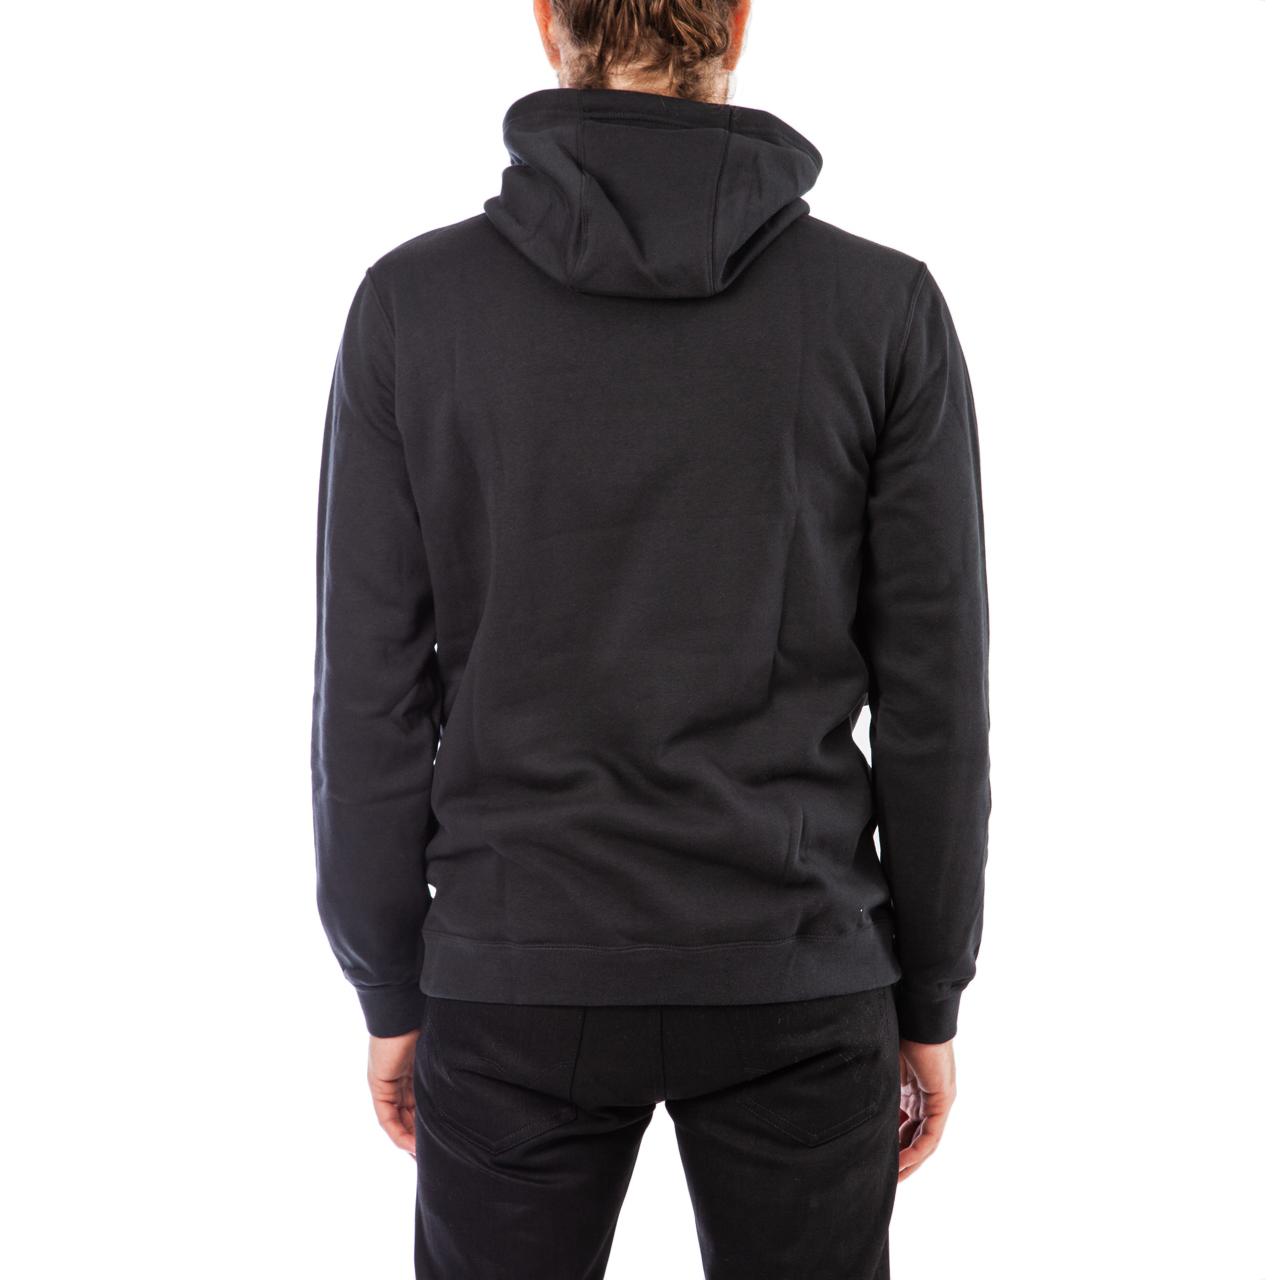 Nike Cotton Box Logo Hoodie in Black for Men - Lyst